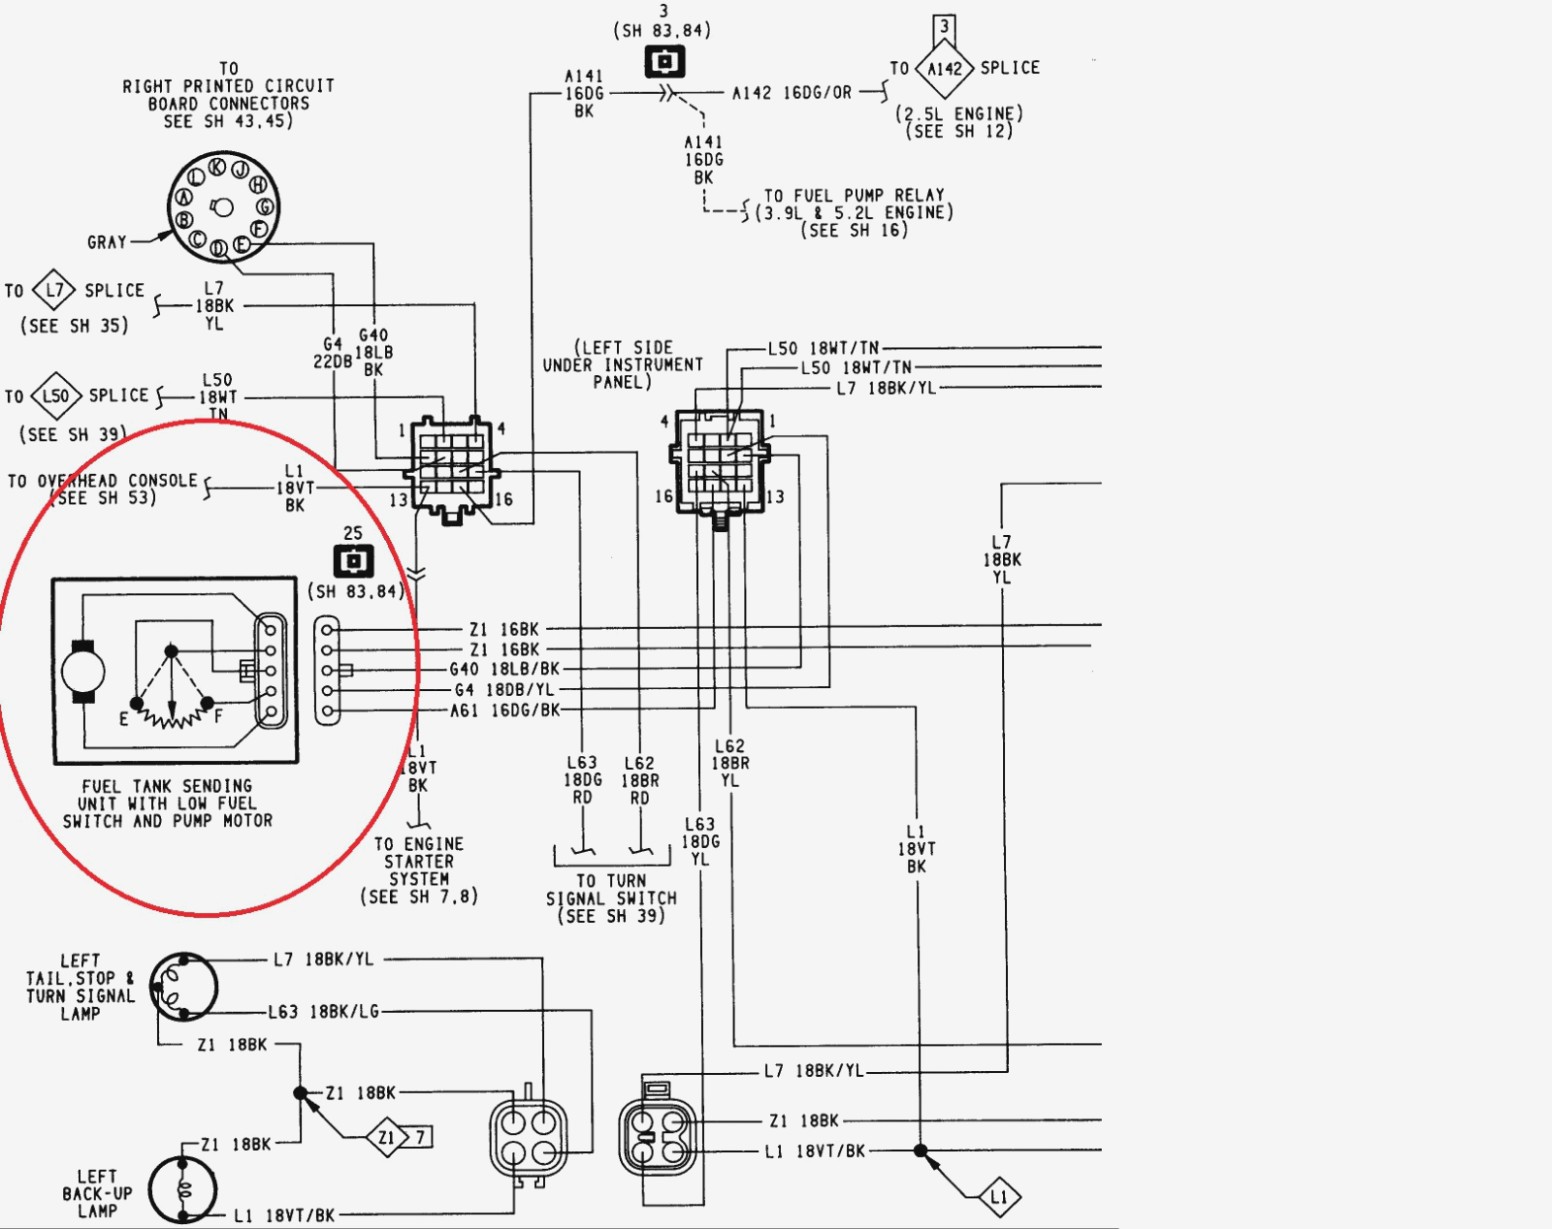 dolphin quad gauges 7600 wiring diagram wiring diagram rows dolphin quad gauges 7600 wiring diagram wiring